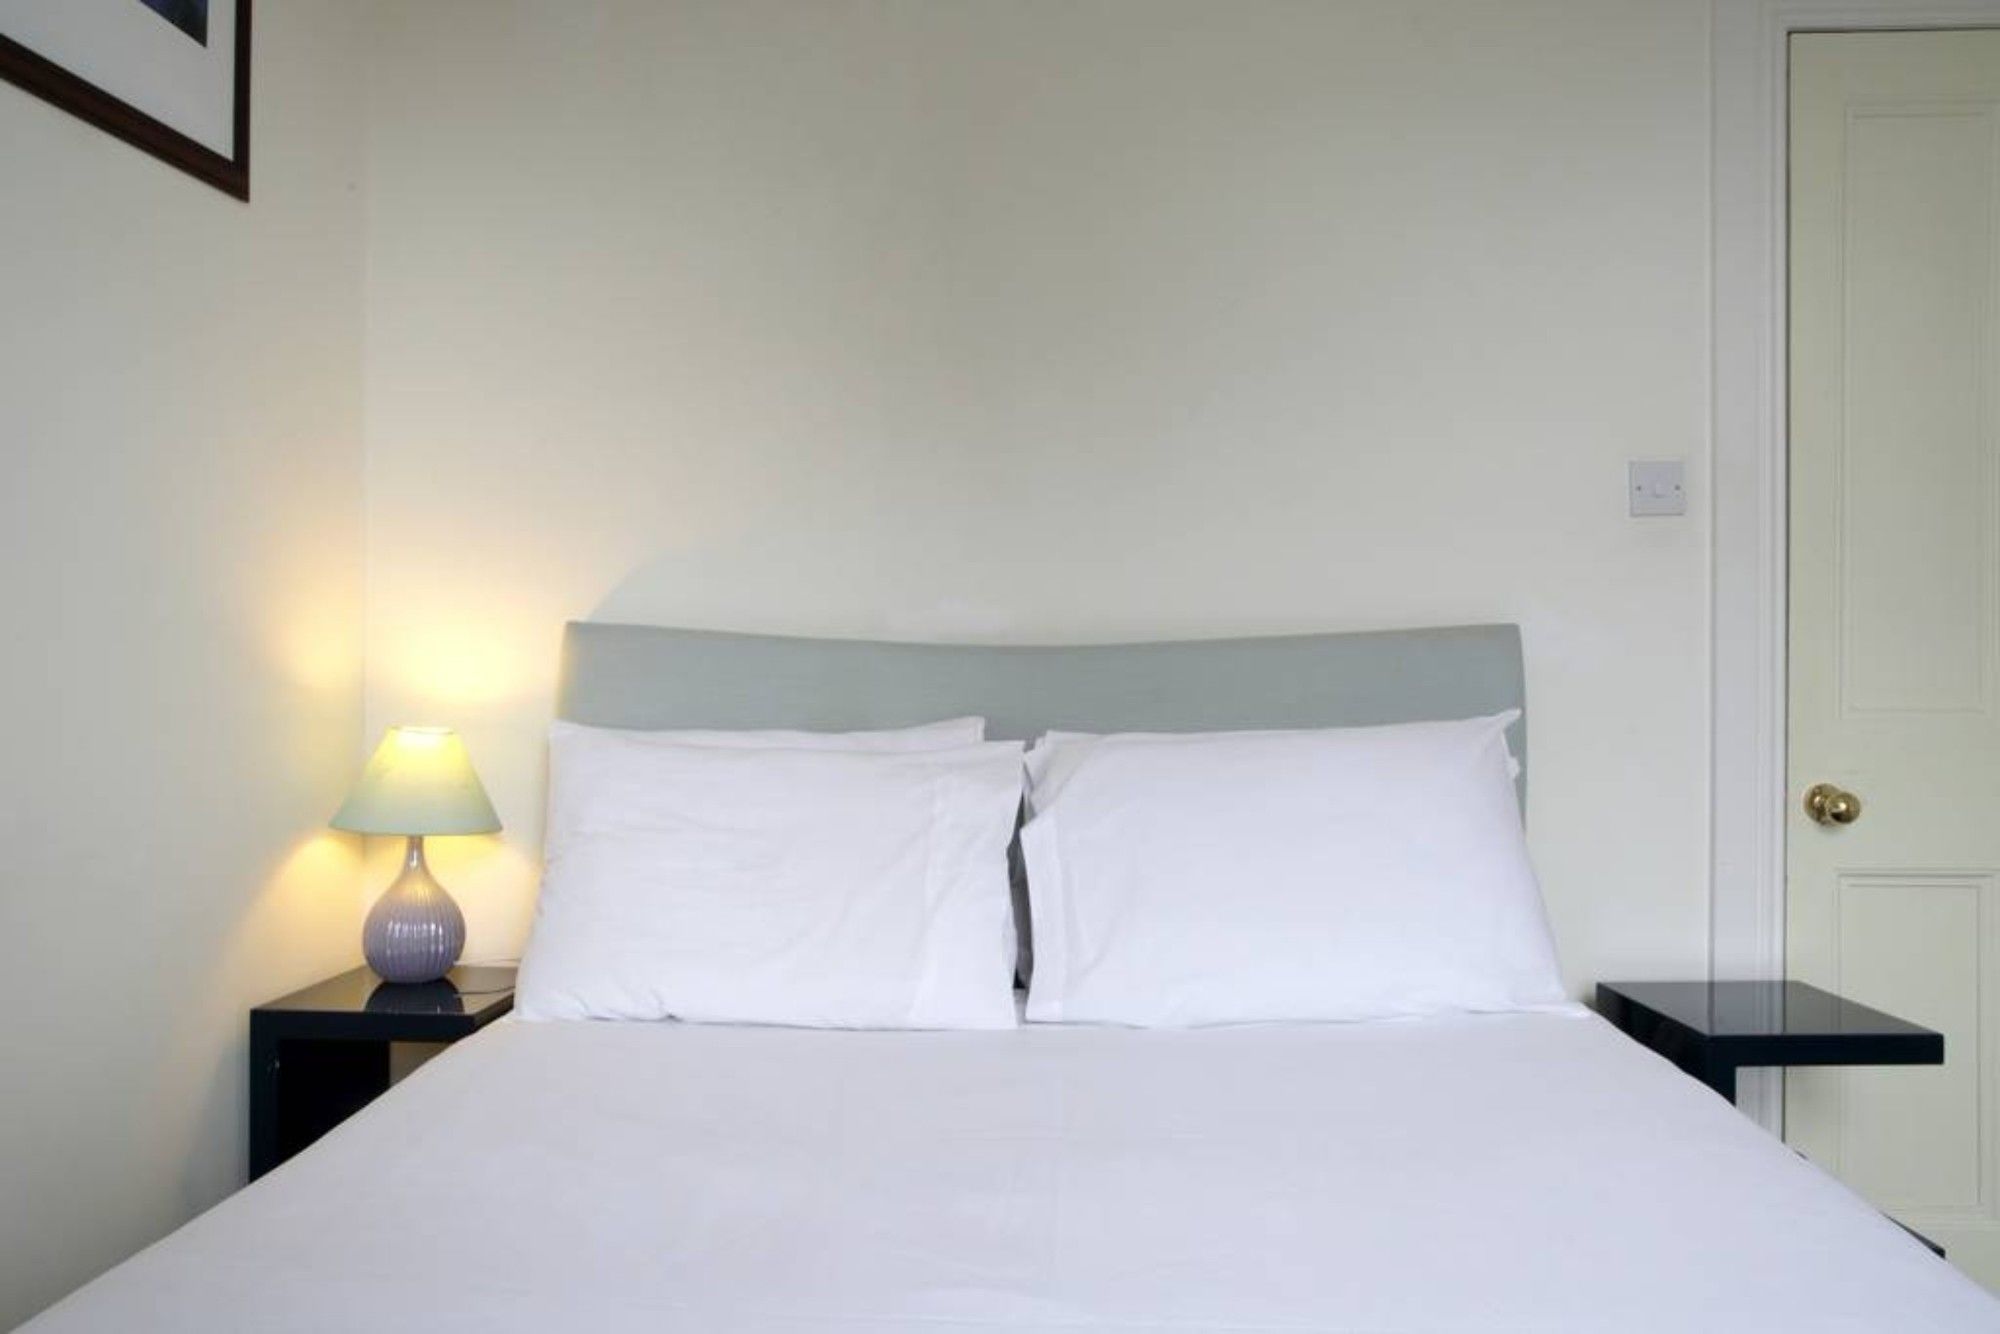 2 Bedroom Flat Near Edinburgh Castle Sleeps 5